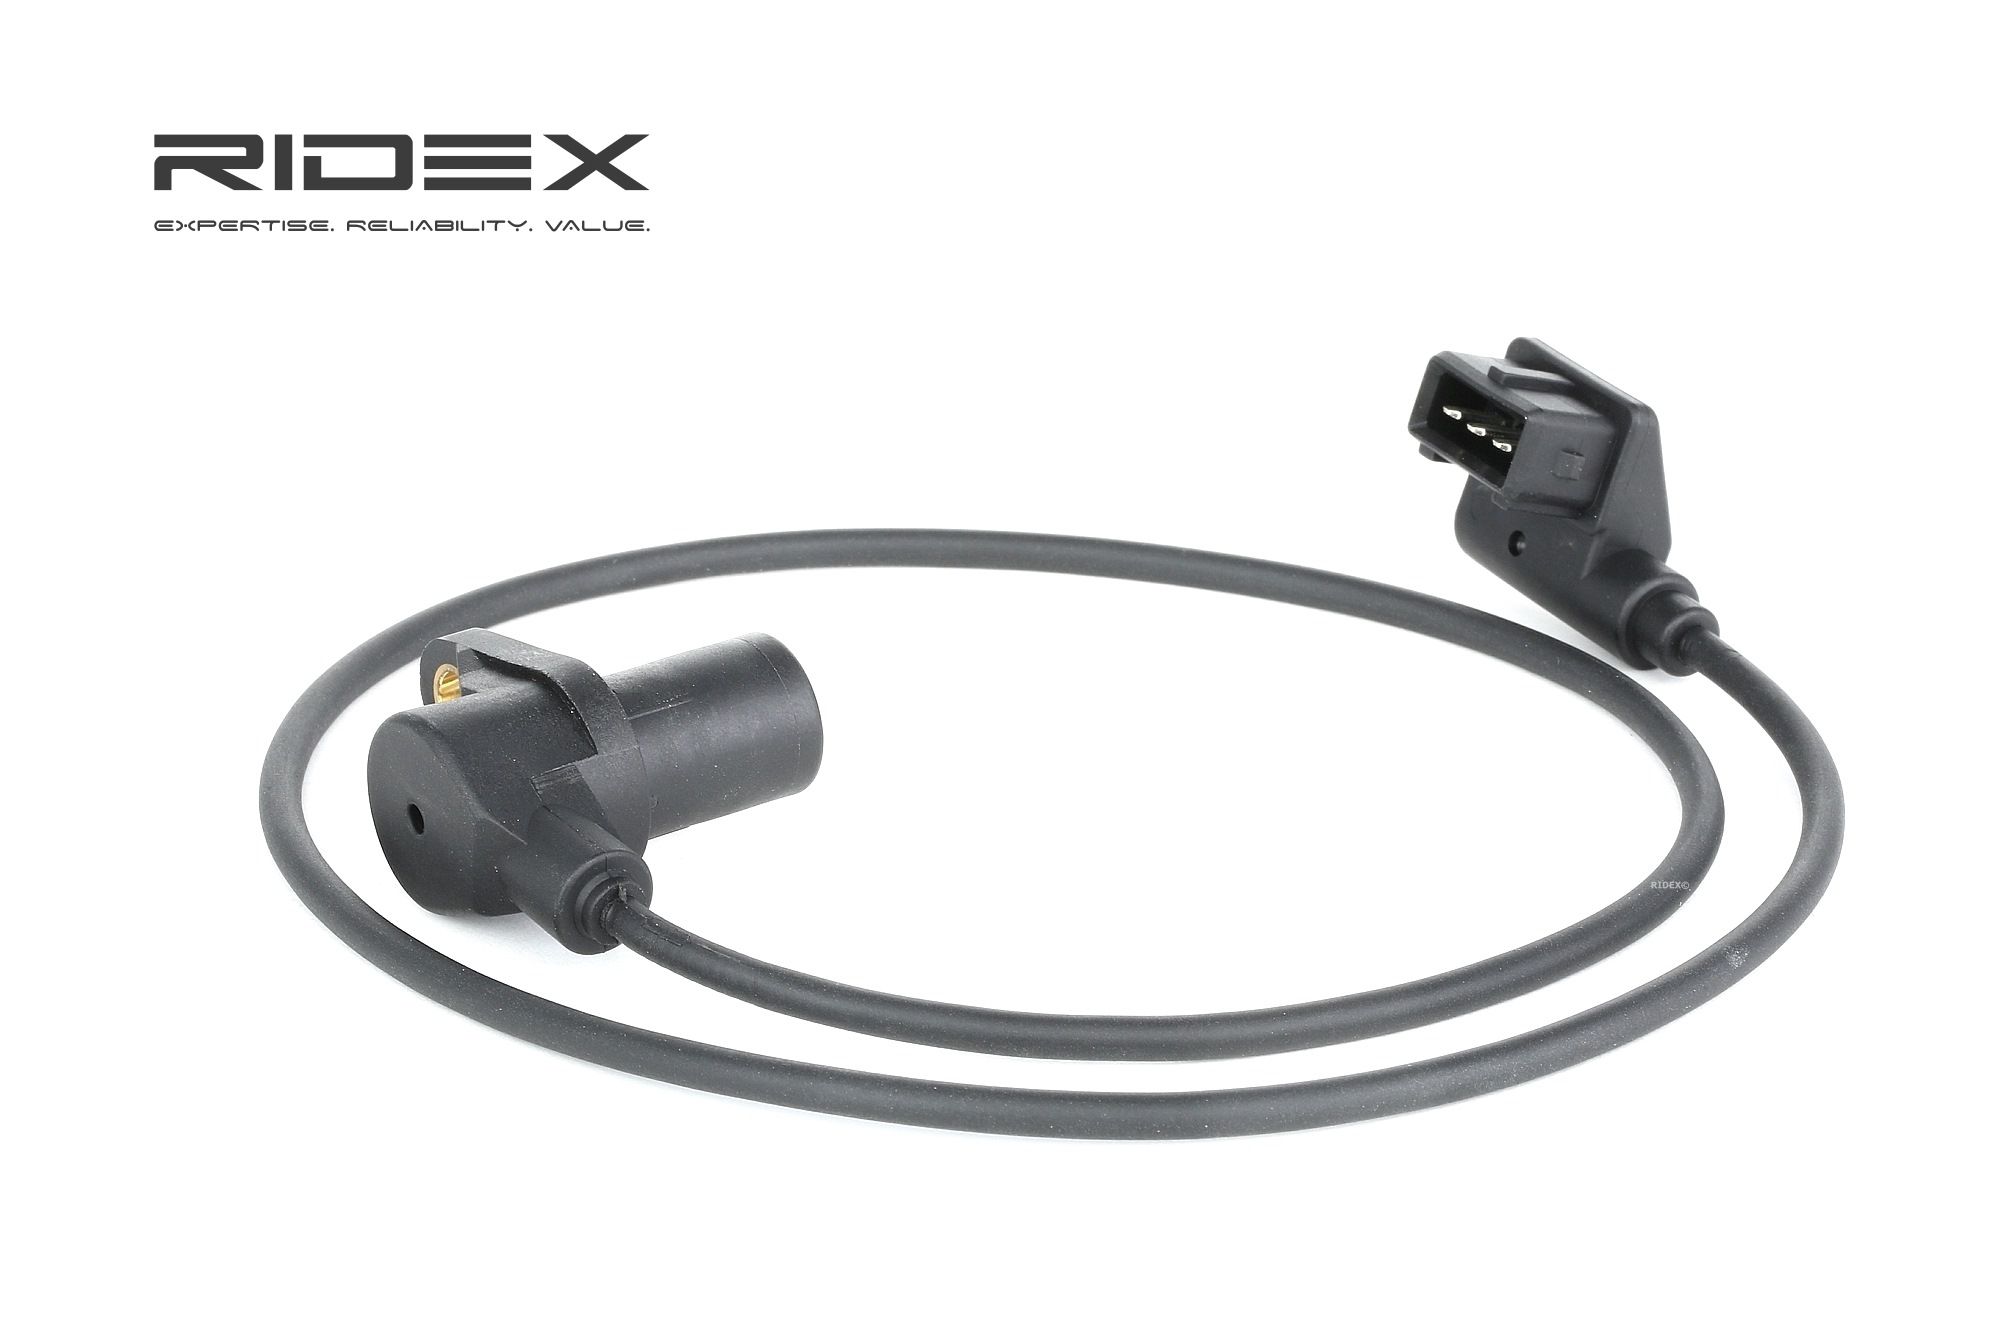 RIDEX Capteur d'impulsions BMW 833C0041 12141726065,12141726066,1726065 1726066